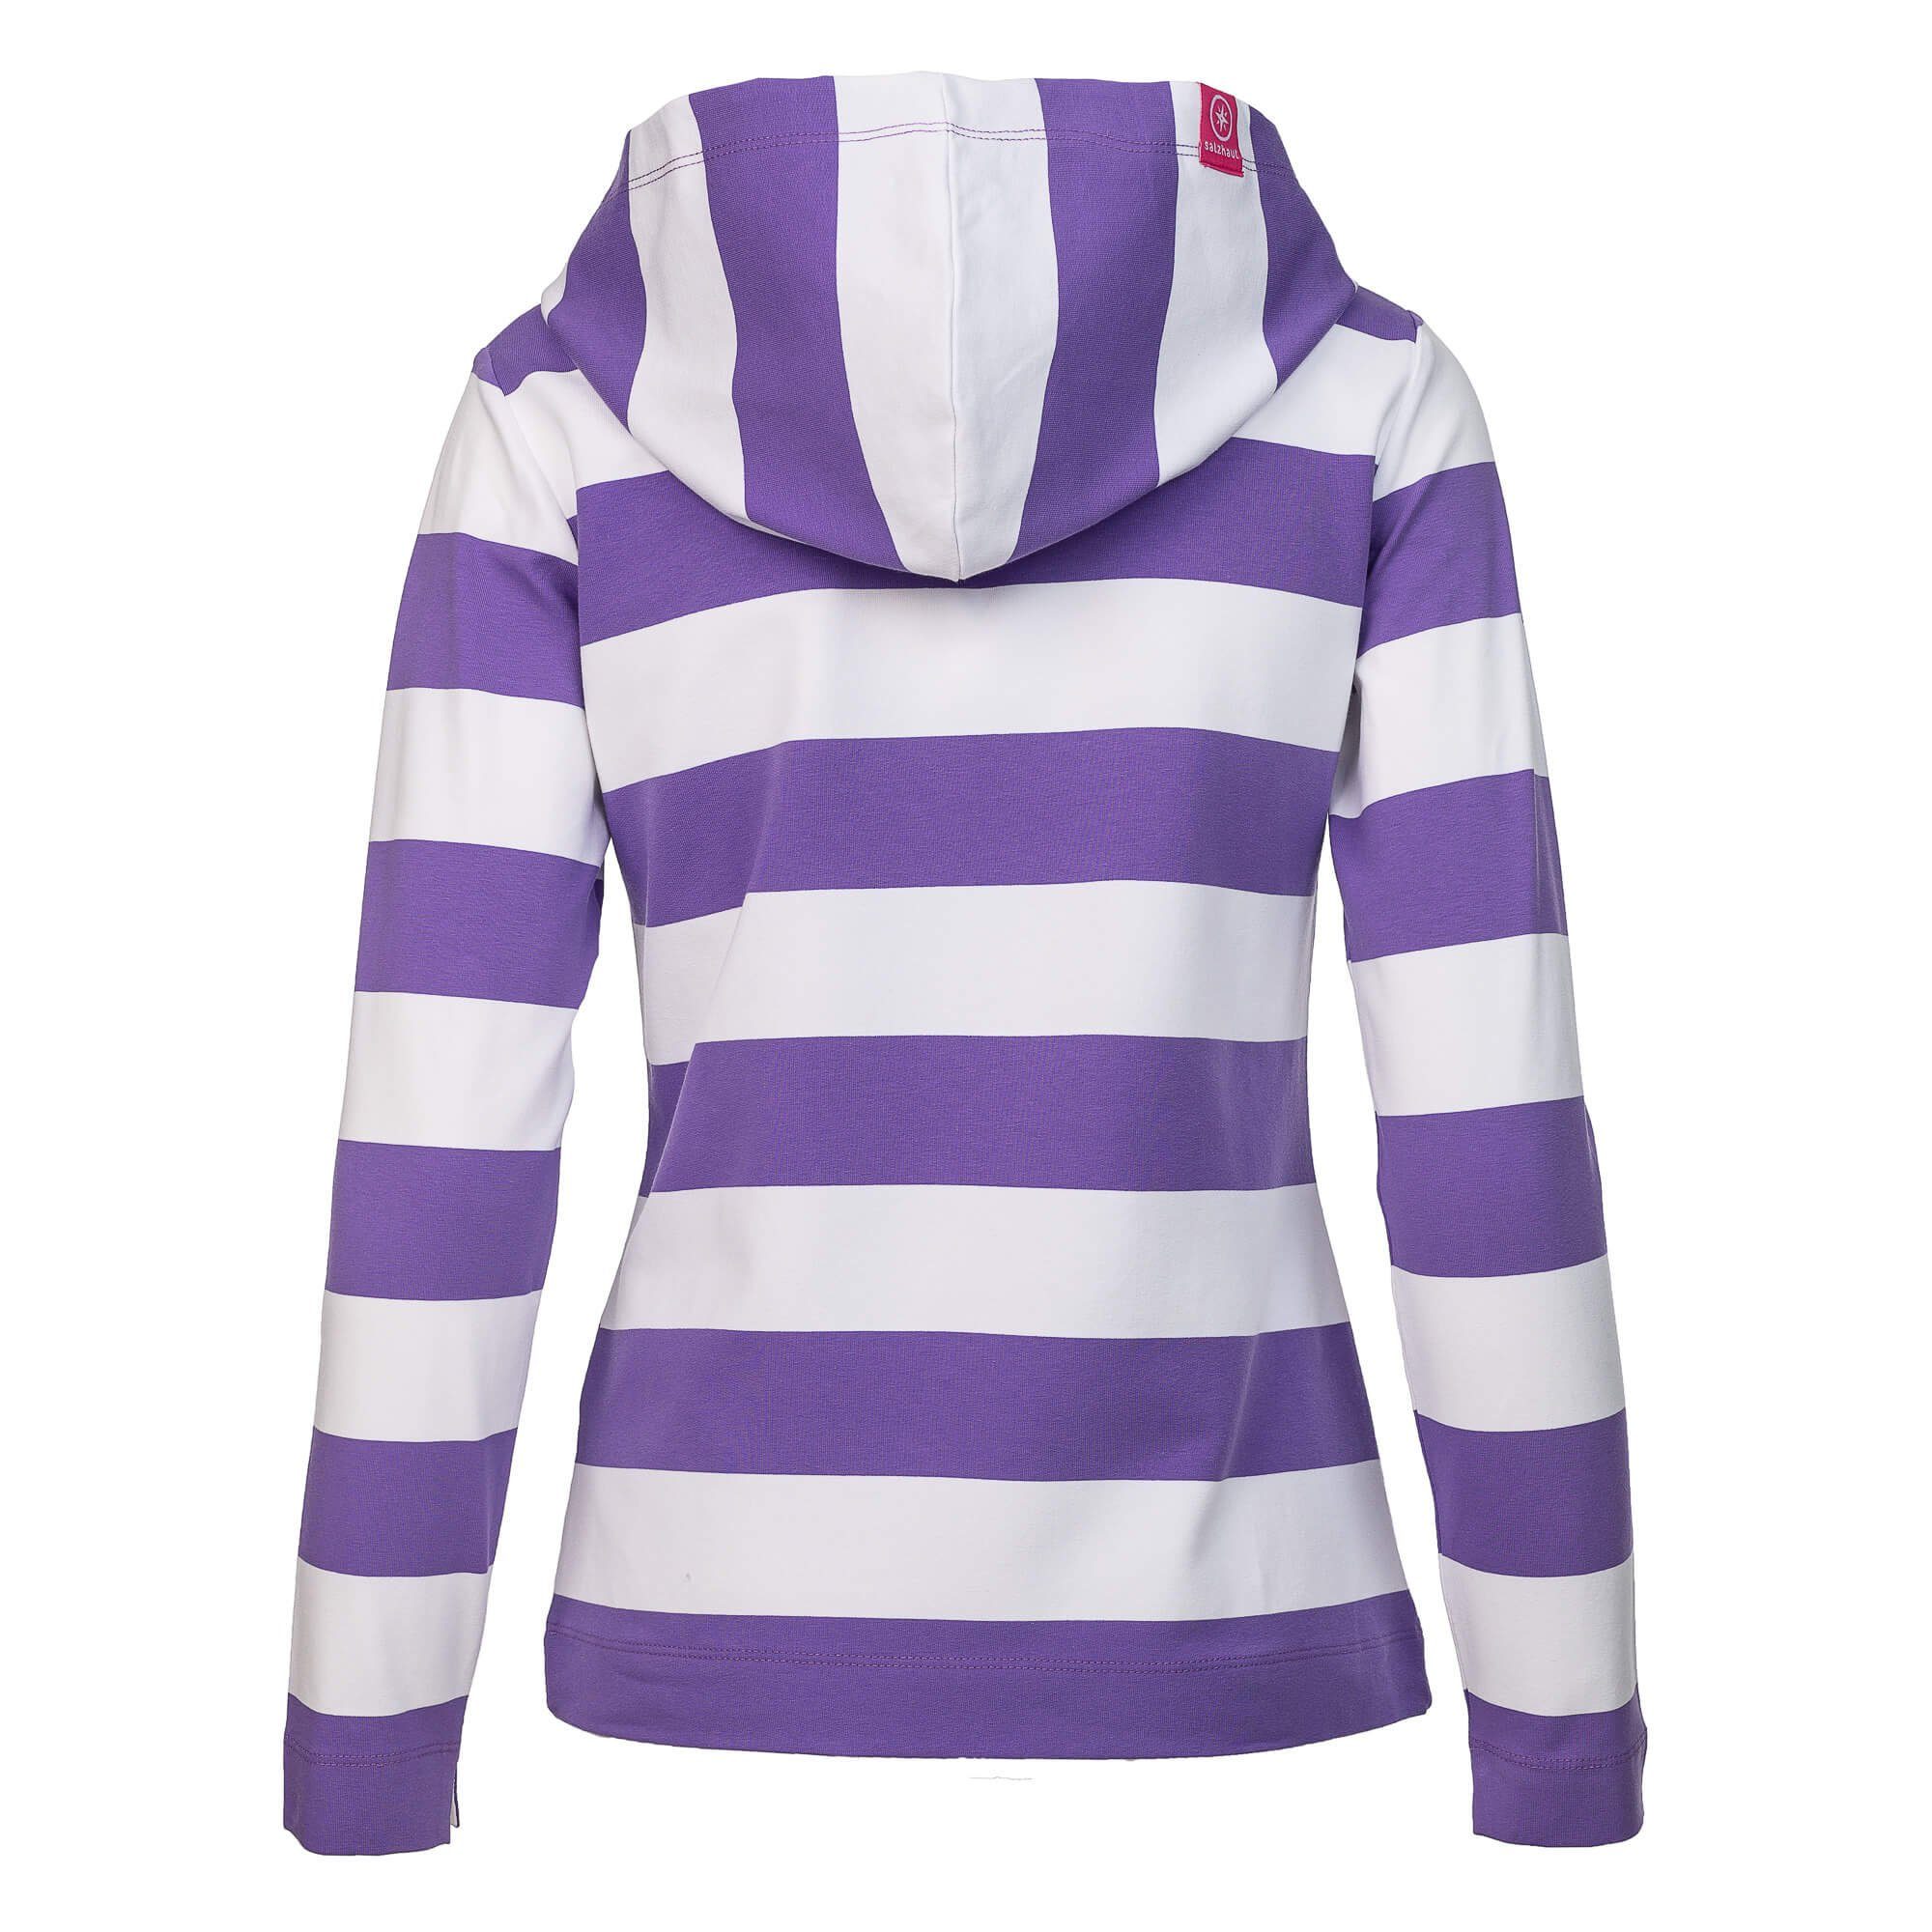 Streifenshirt Hakana Colourblock-Streifen Hoodie Kapuzenshirt Kapuzen Shirt purple-white salzhaut - Damen